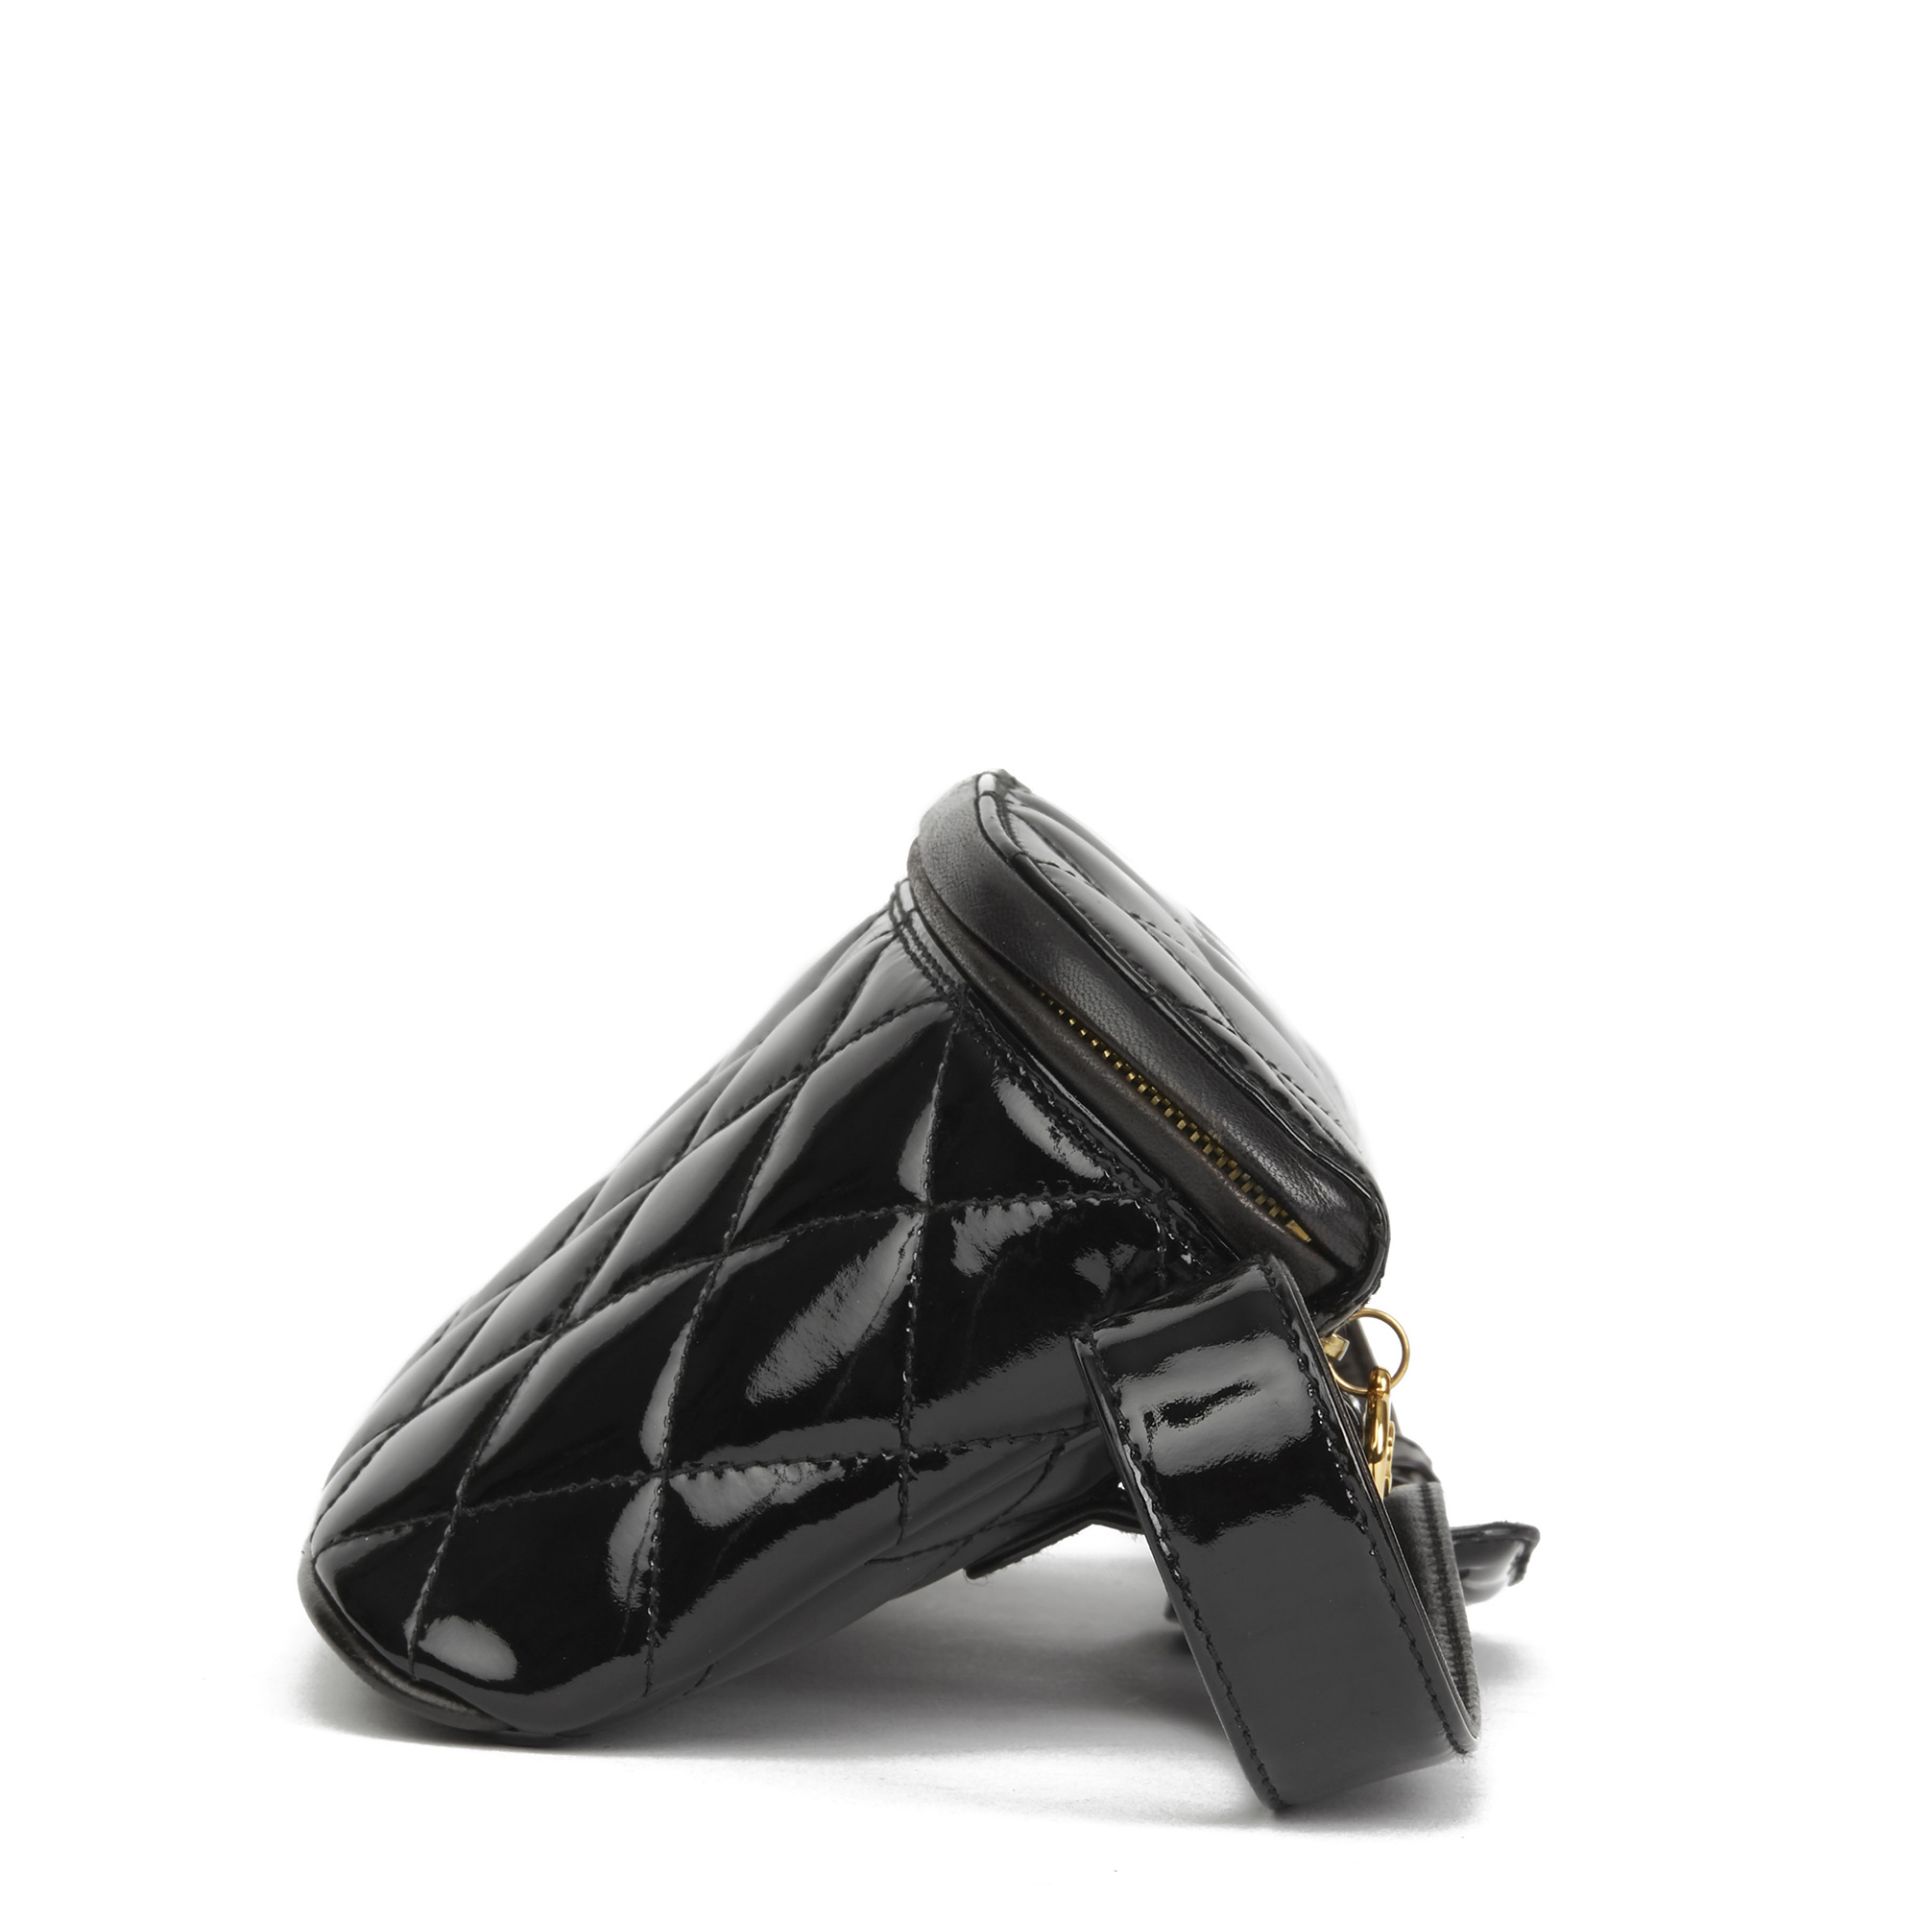 Chanel Black Quilted Patent Leather Vintage Timeless Belt Bag - Image 11 of 12